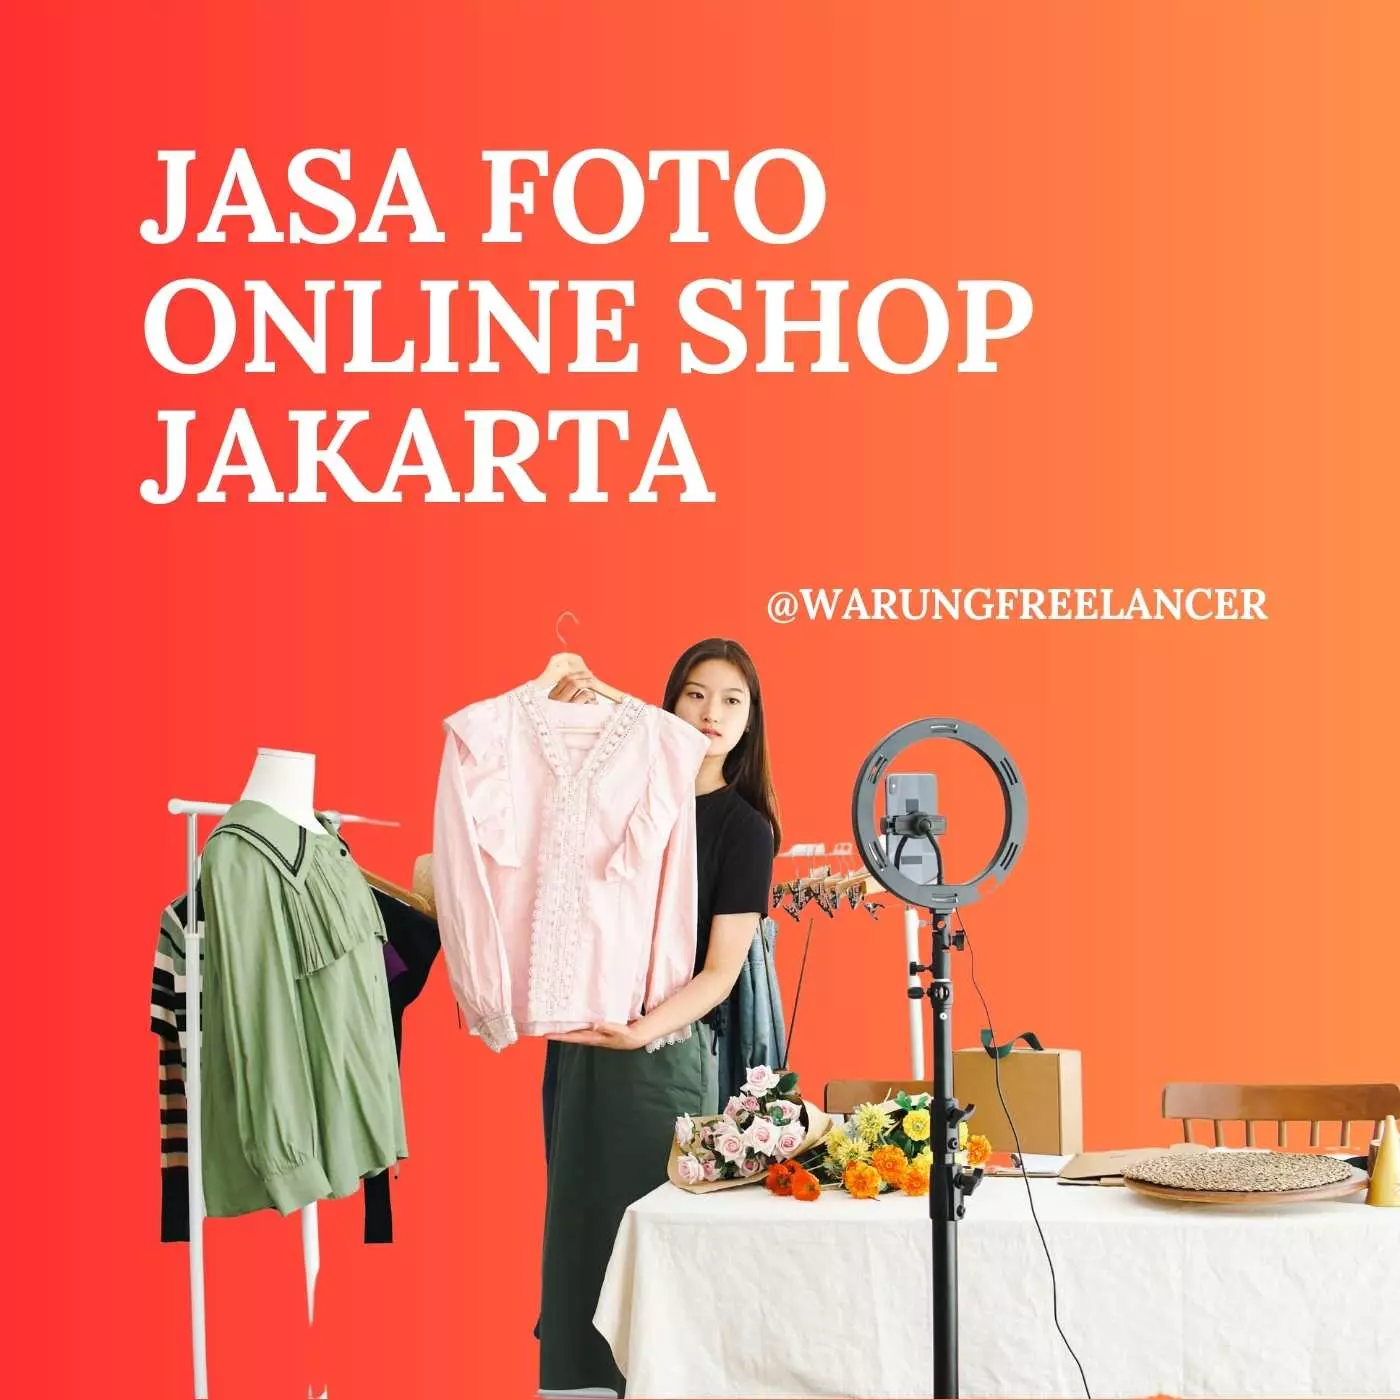 Jasa Foto Online Shop Jakarta